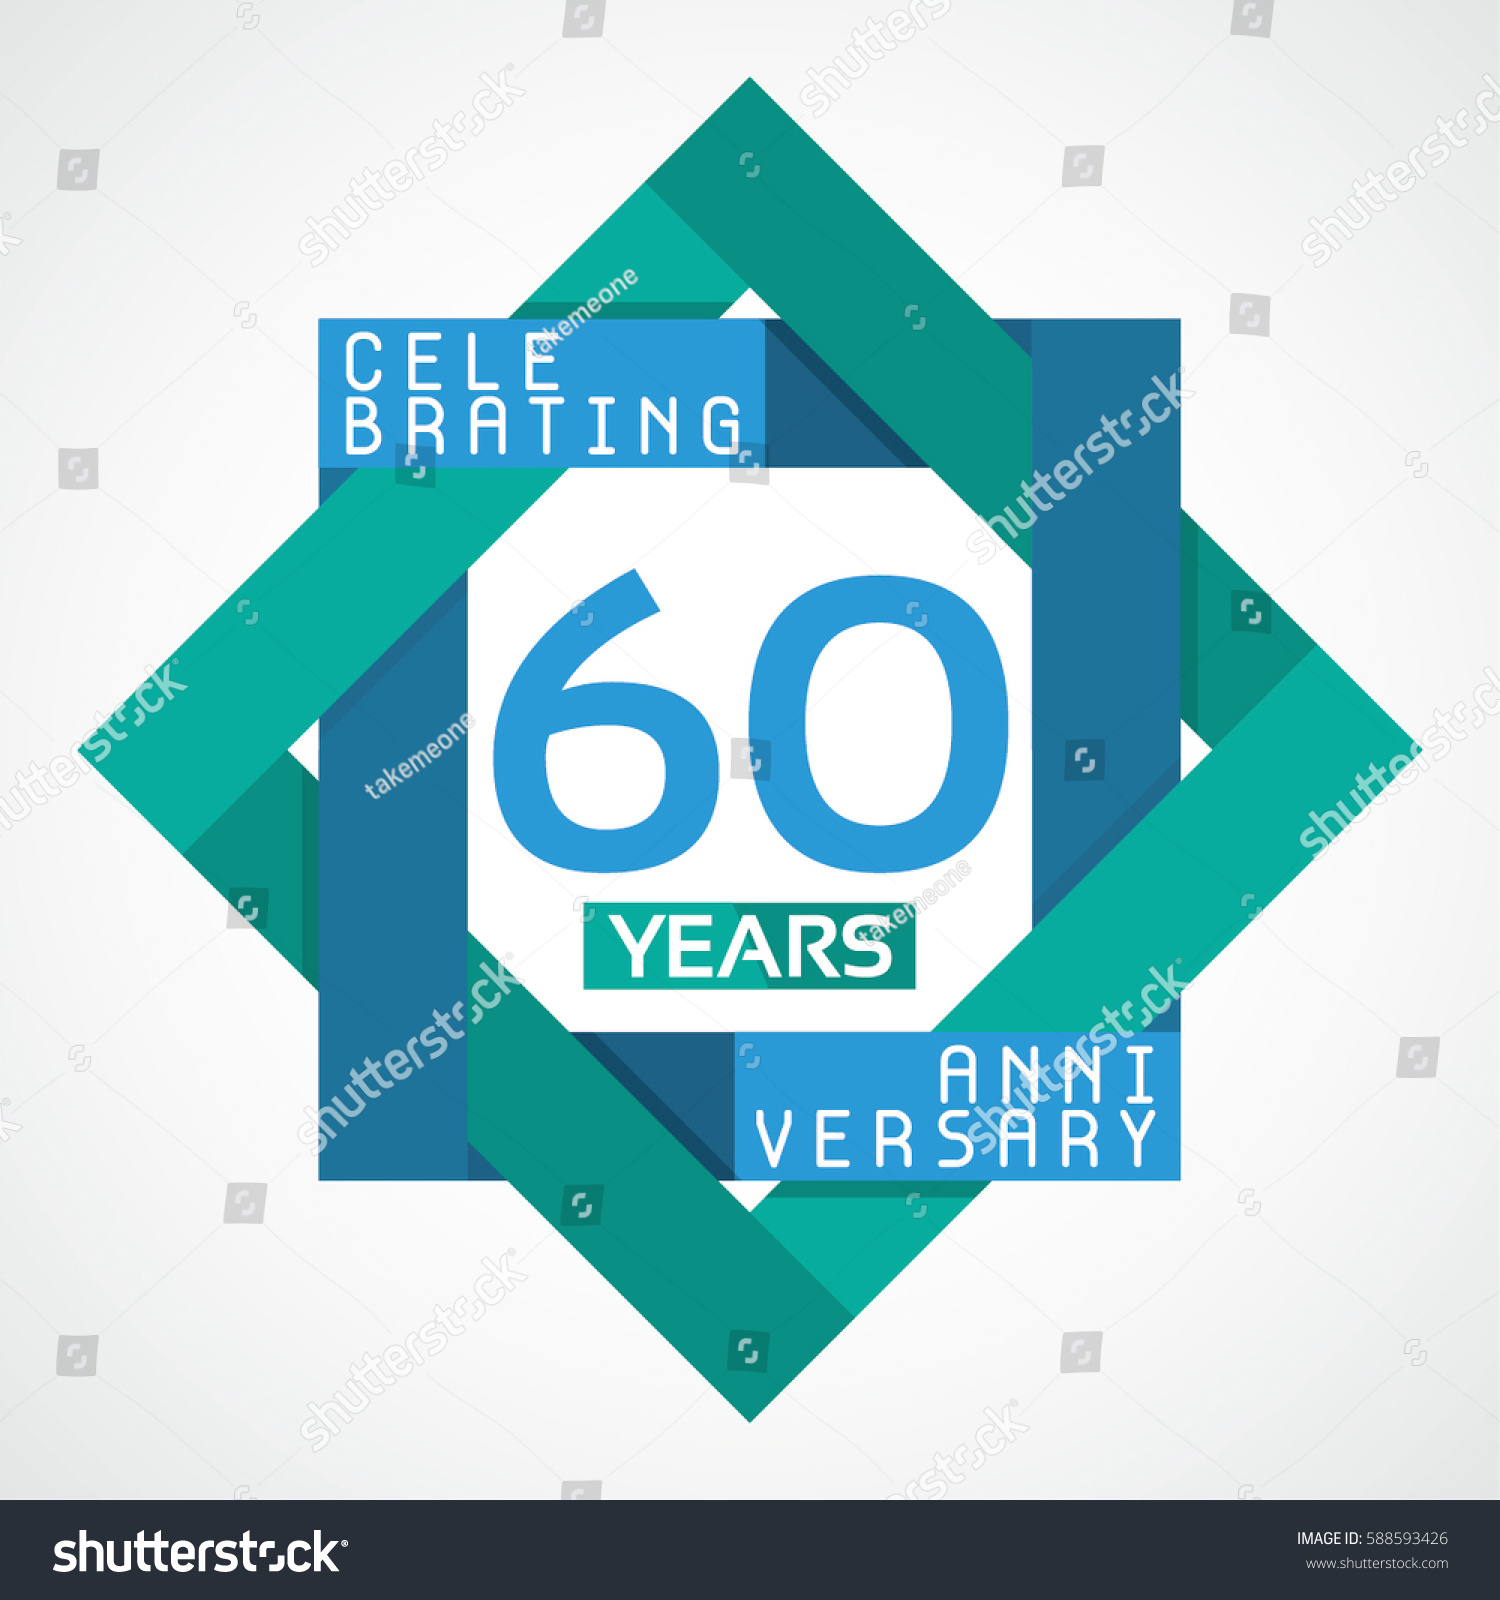 SVG of 60 Years Anniversary Celebration Design.
 svg